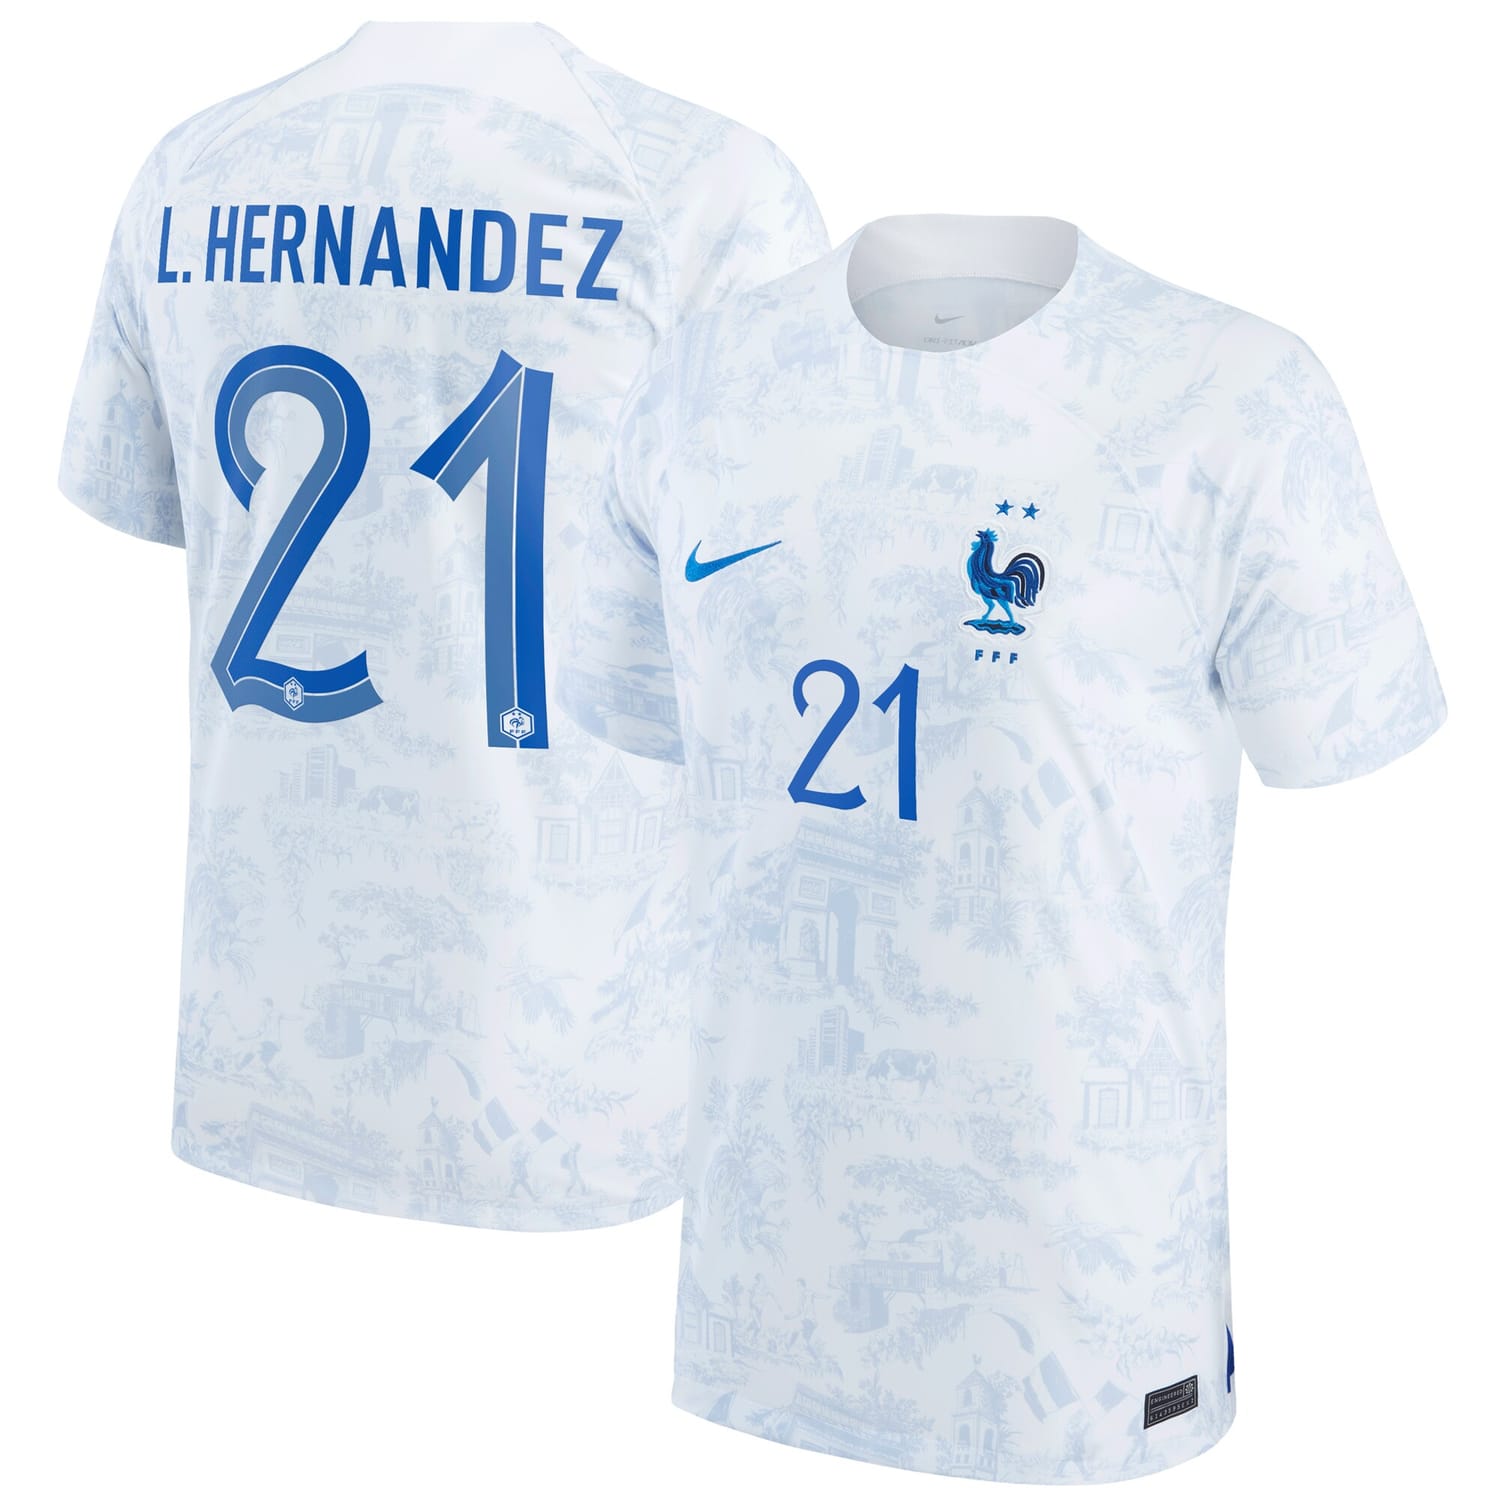 France National Team Away Jersey Shirt 2022 player Lucas Hernandez 21 printing for Men